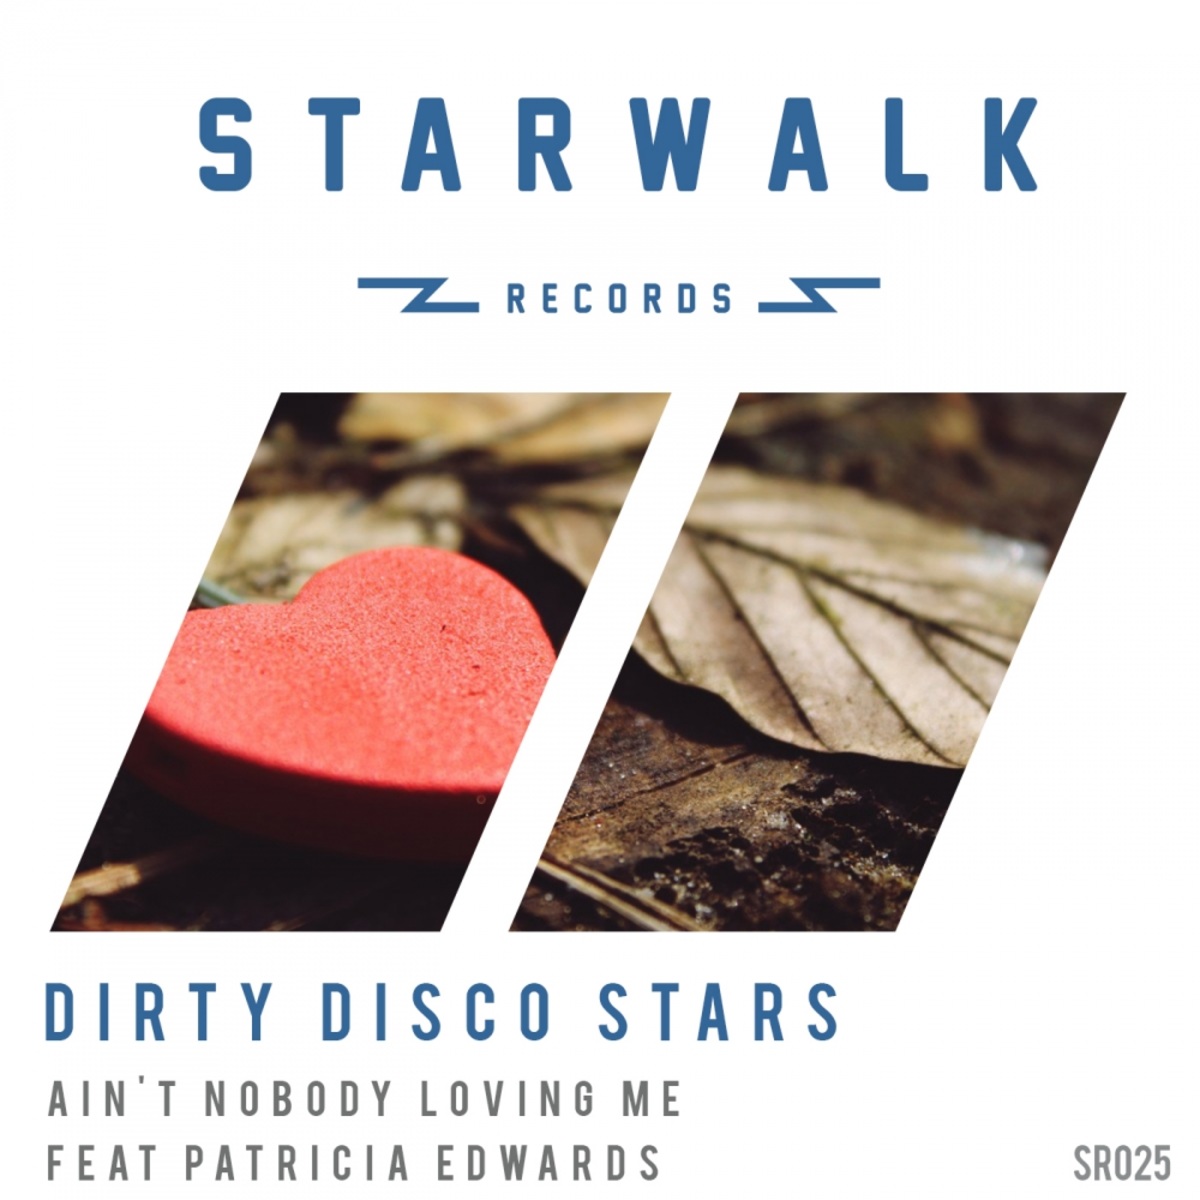 Dirty Disco Stars ft Patricia Edwards - Ain't Nobody Loving Me / Starwalk Records